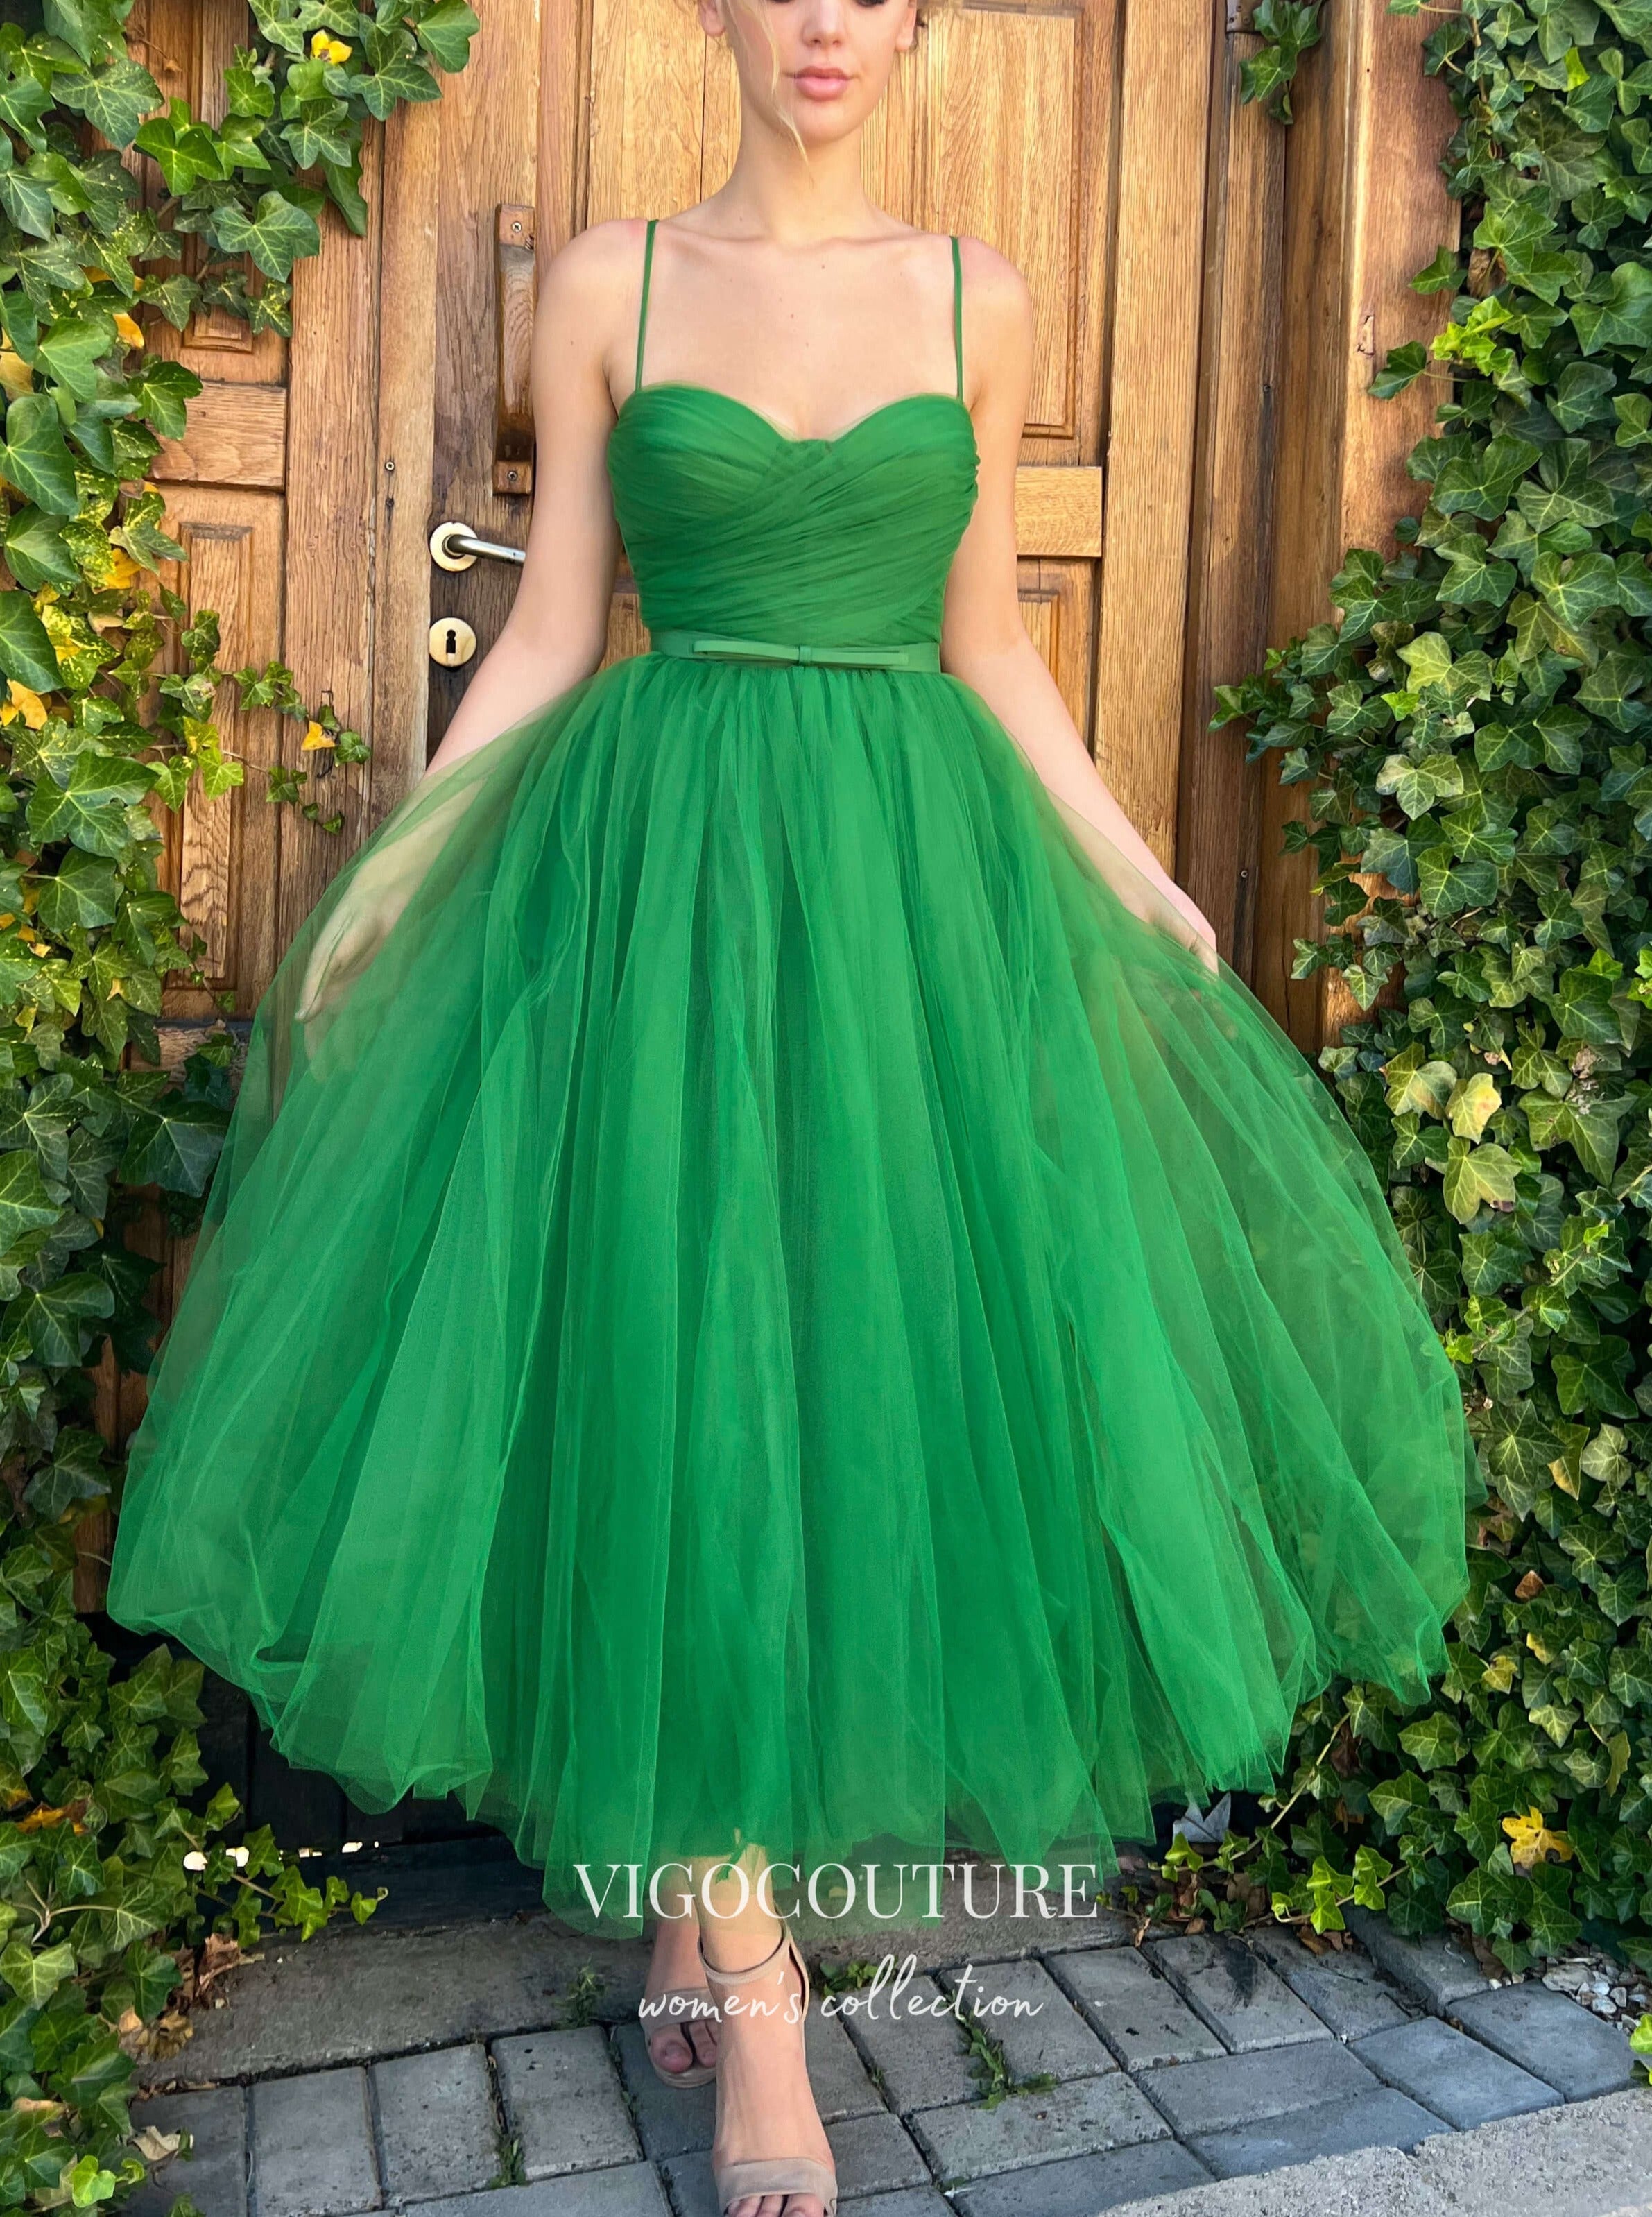 vigocouture-Midi Length Hoco Dresses Spaghetti Strap Homecoming Dresses hc226-Prom Dresses-vigocouture-Green-US0-